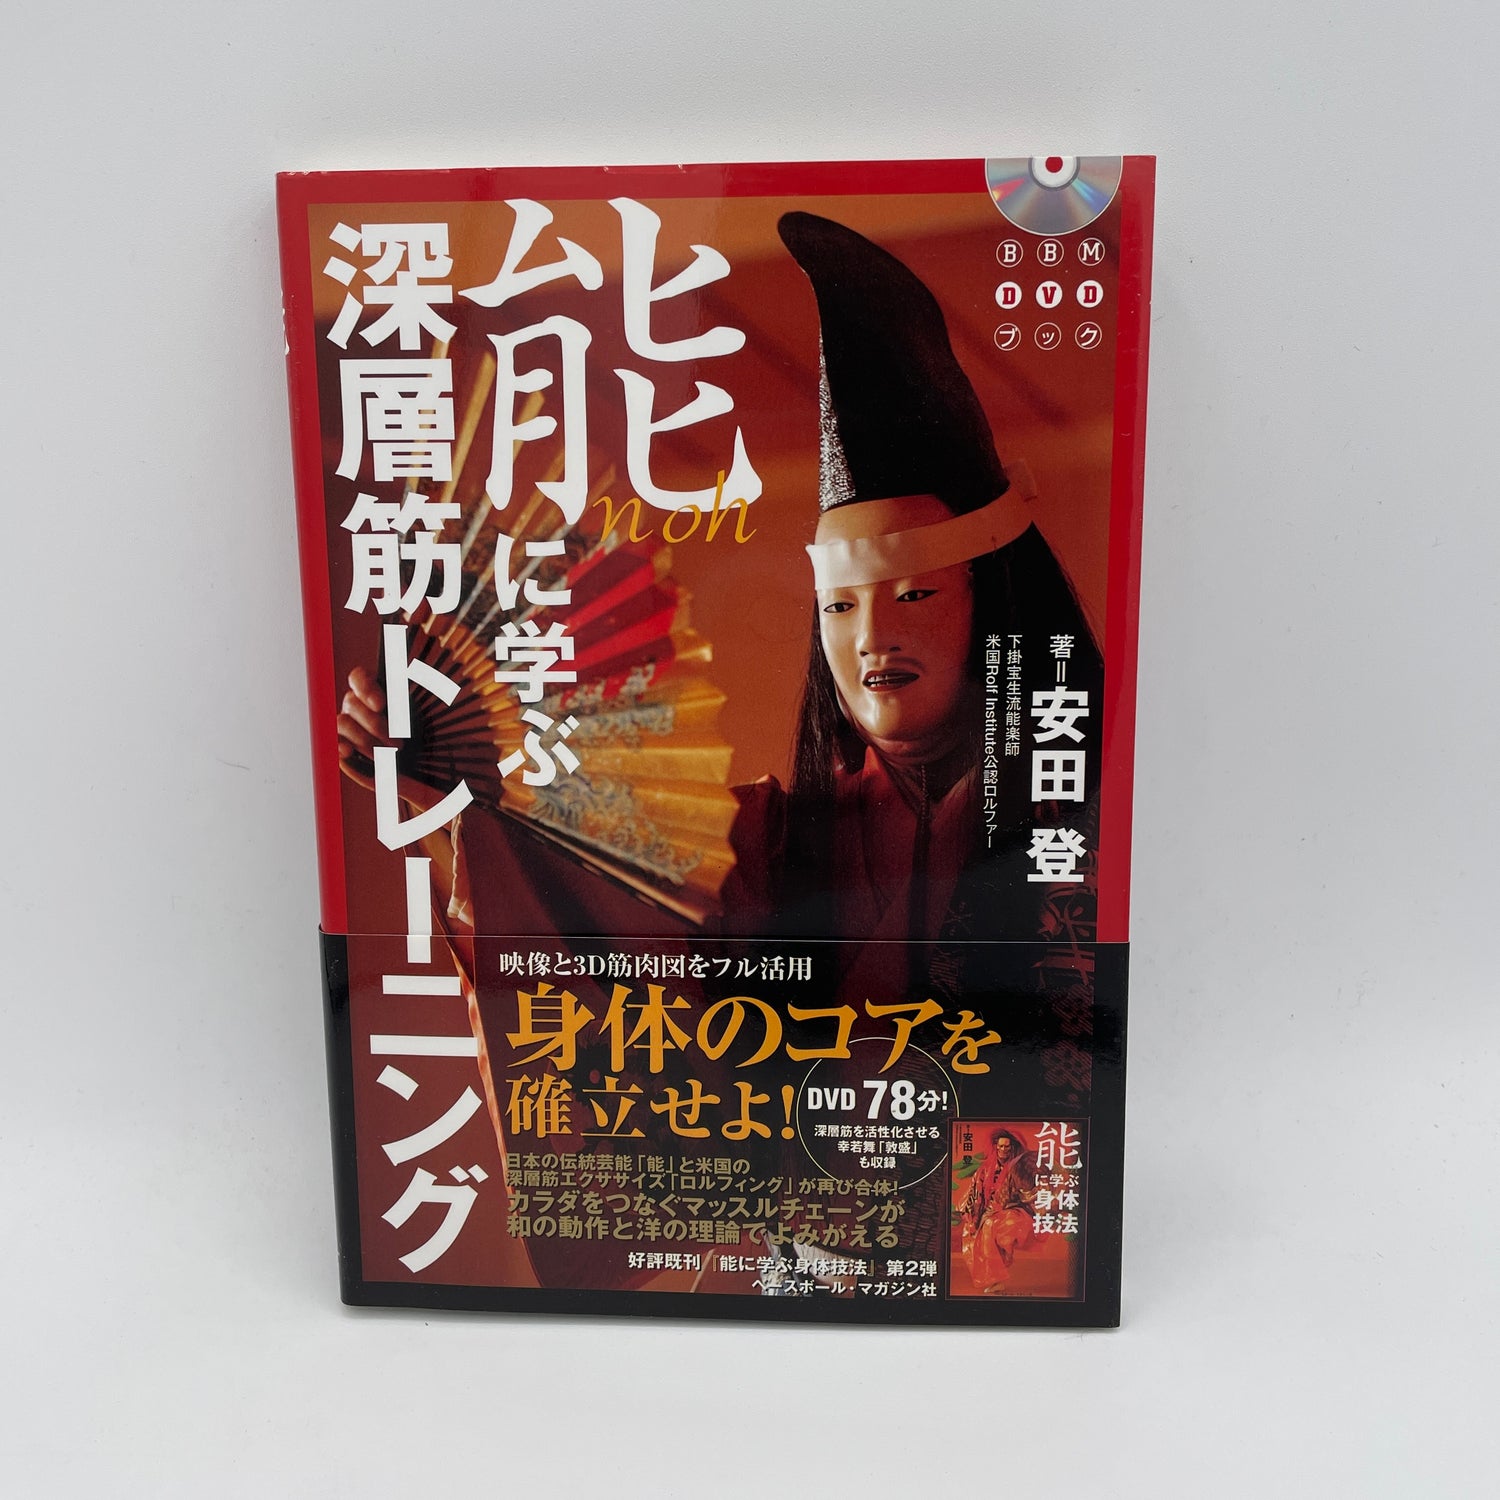 Noh Deep Muscle Training Book & DVD (Region 2) by Noboru Yasuda (Preowned)